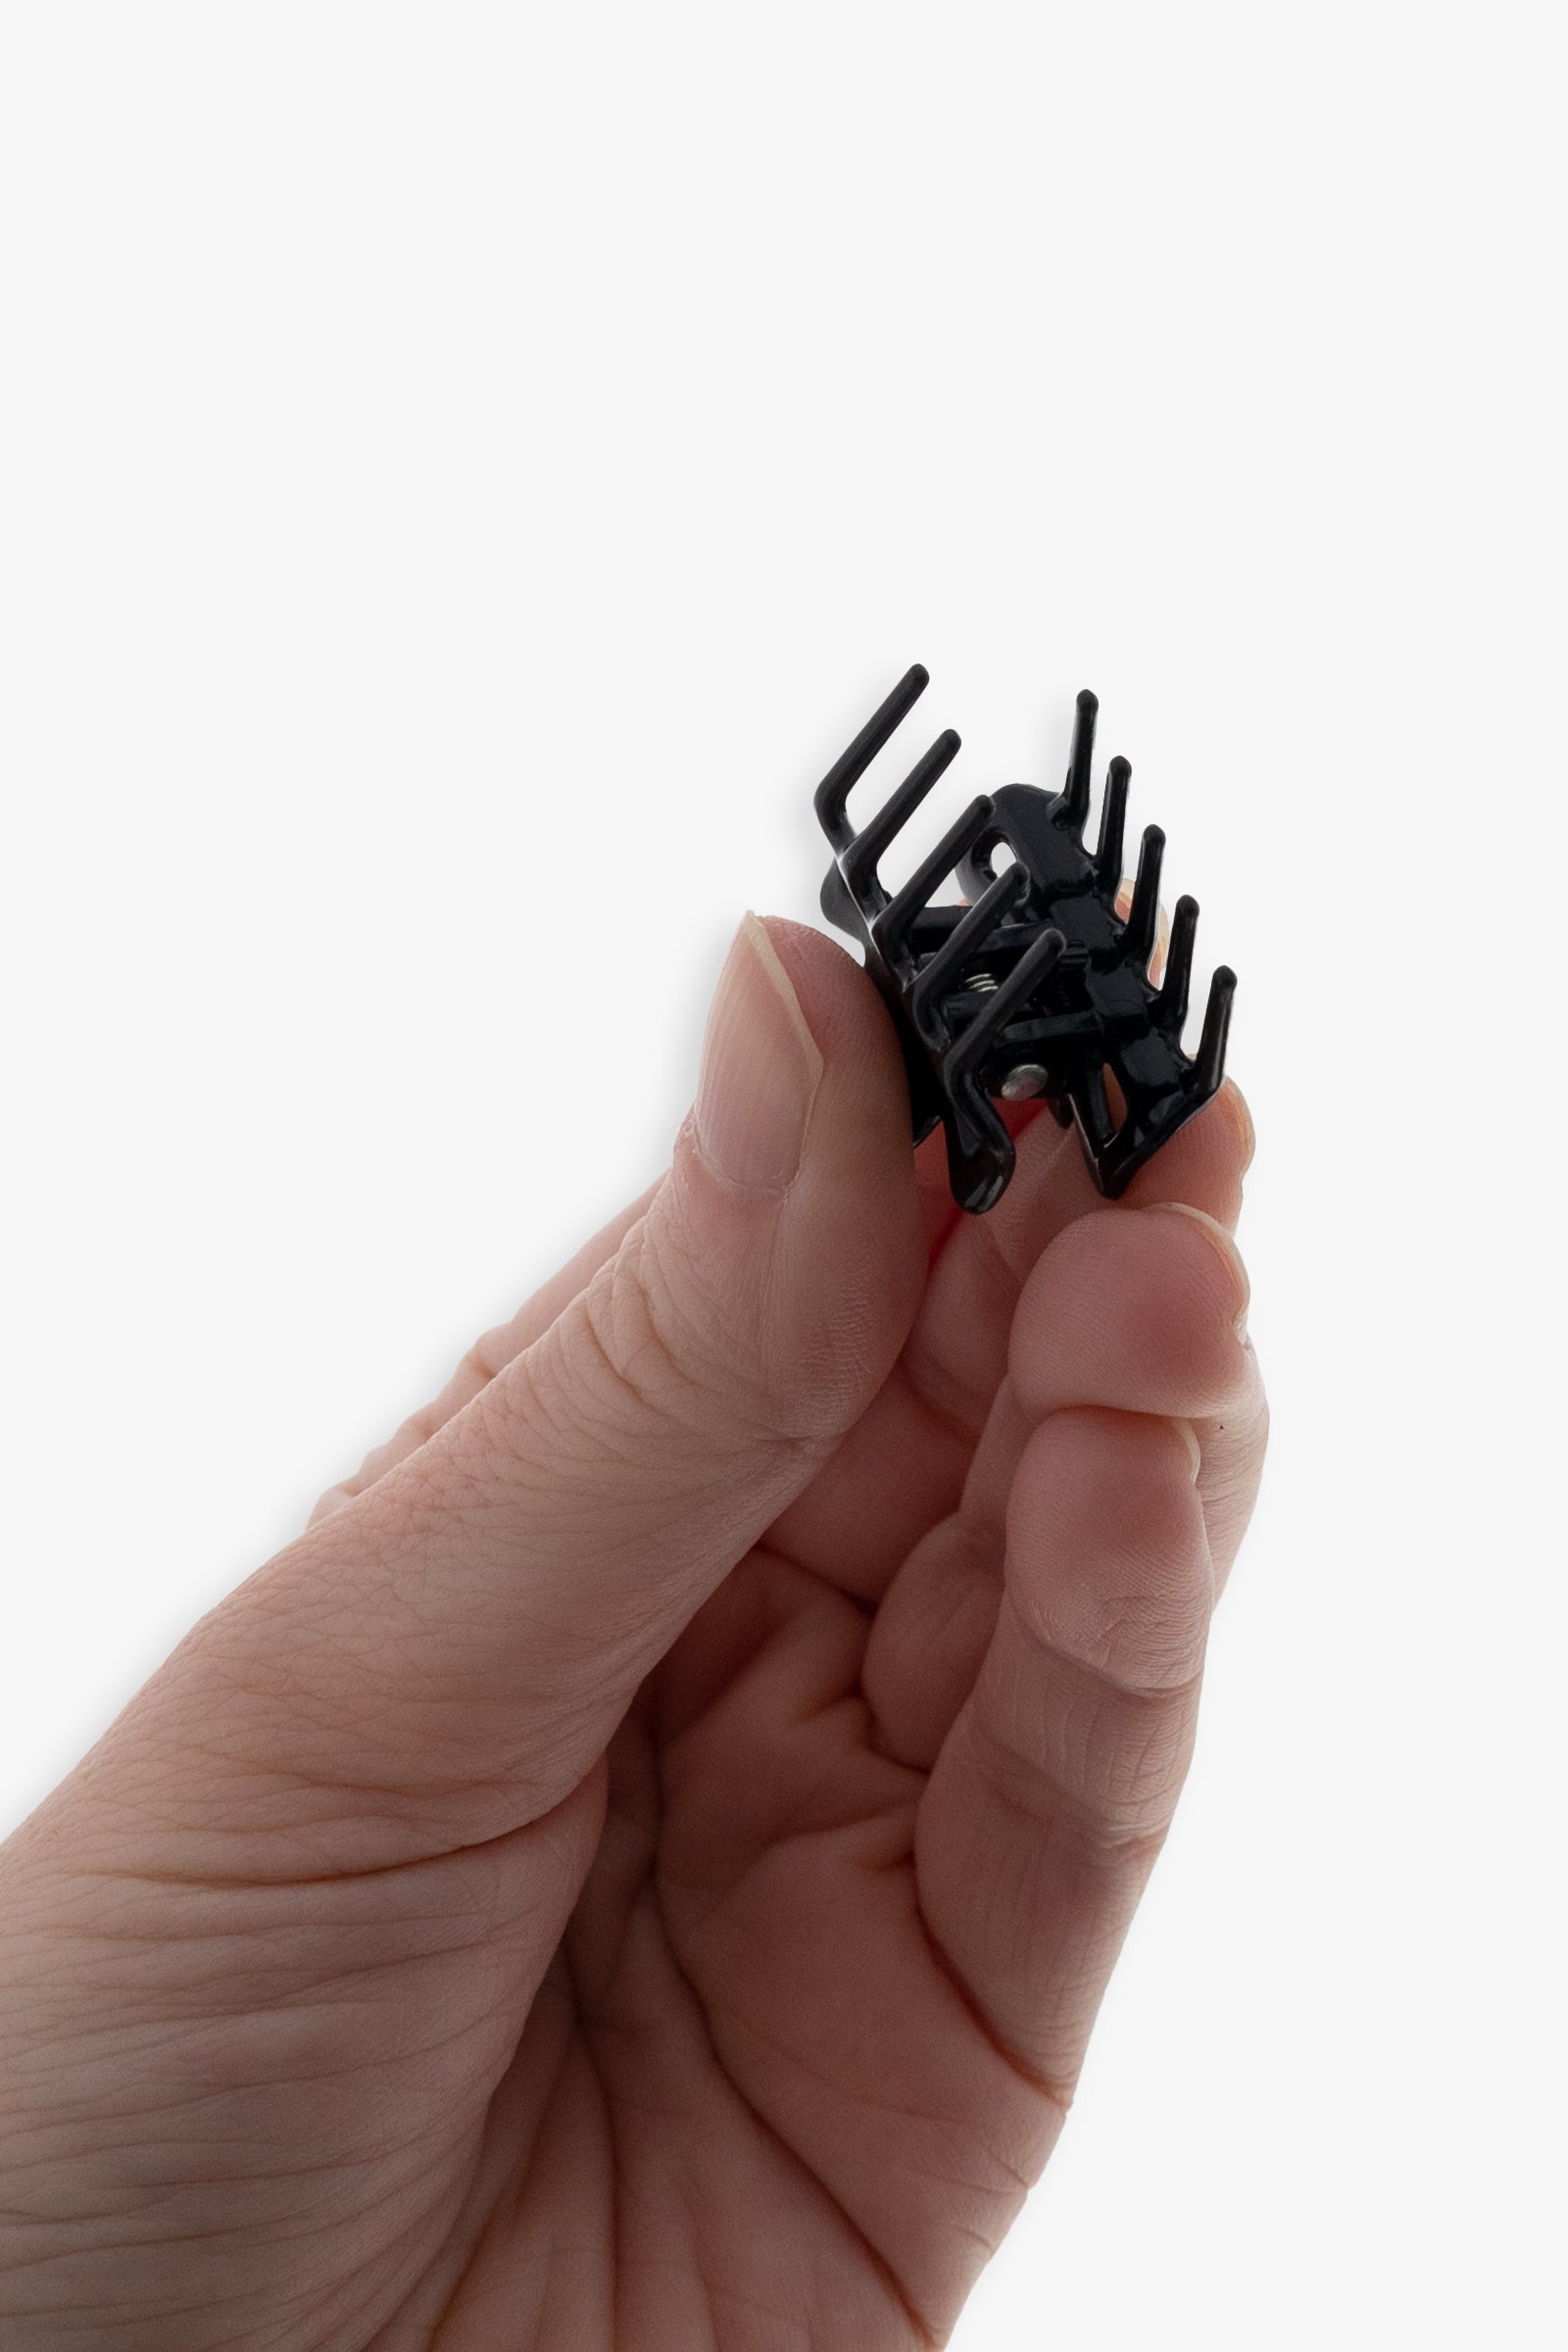 36pc Small Plastic Mini Hair Clips